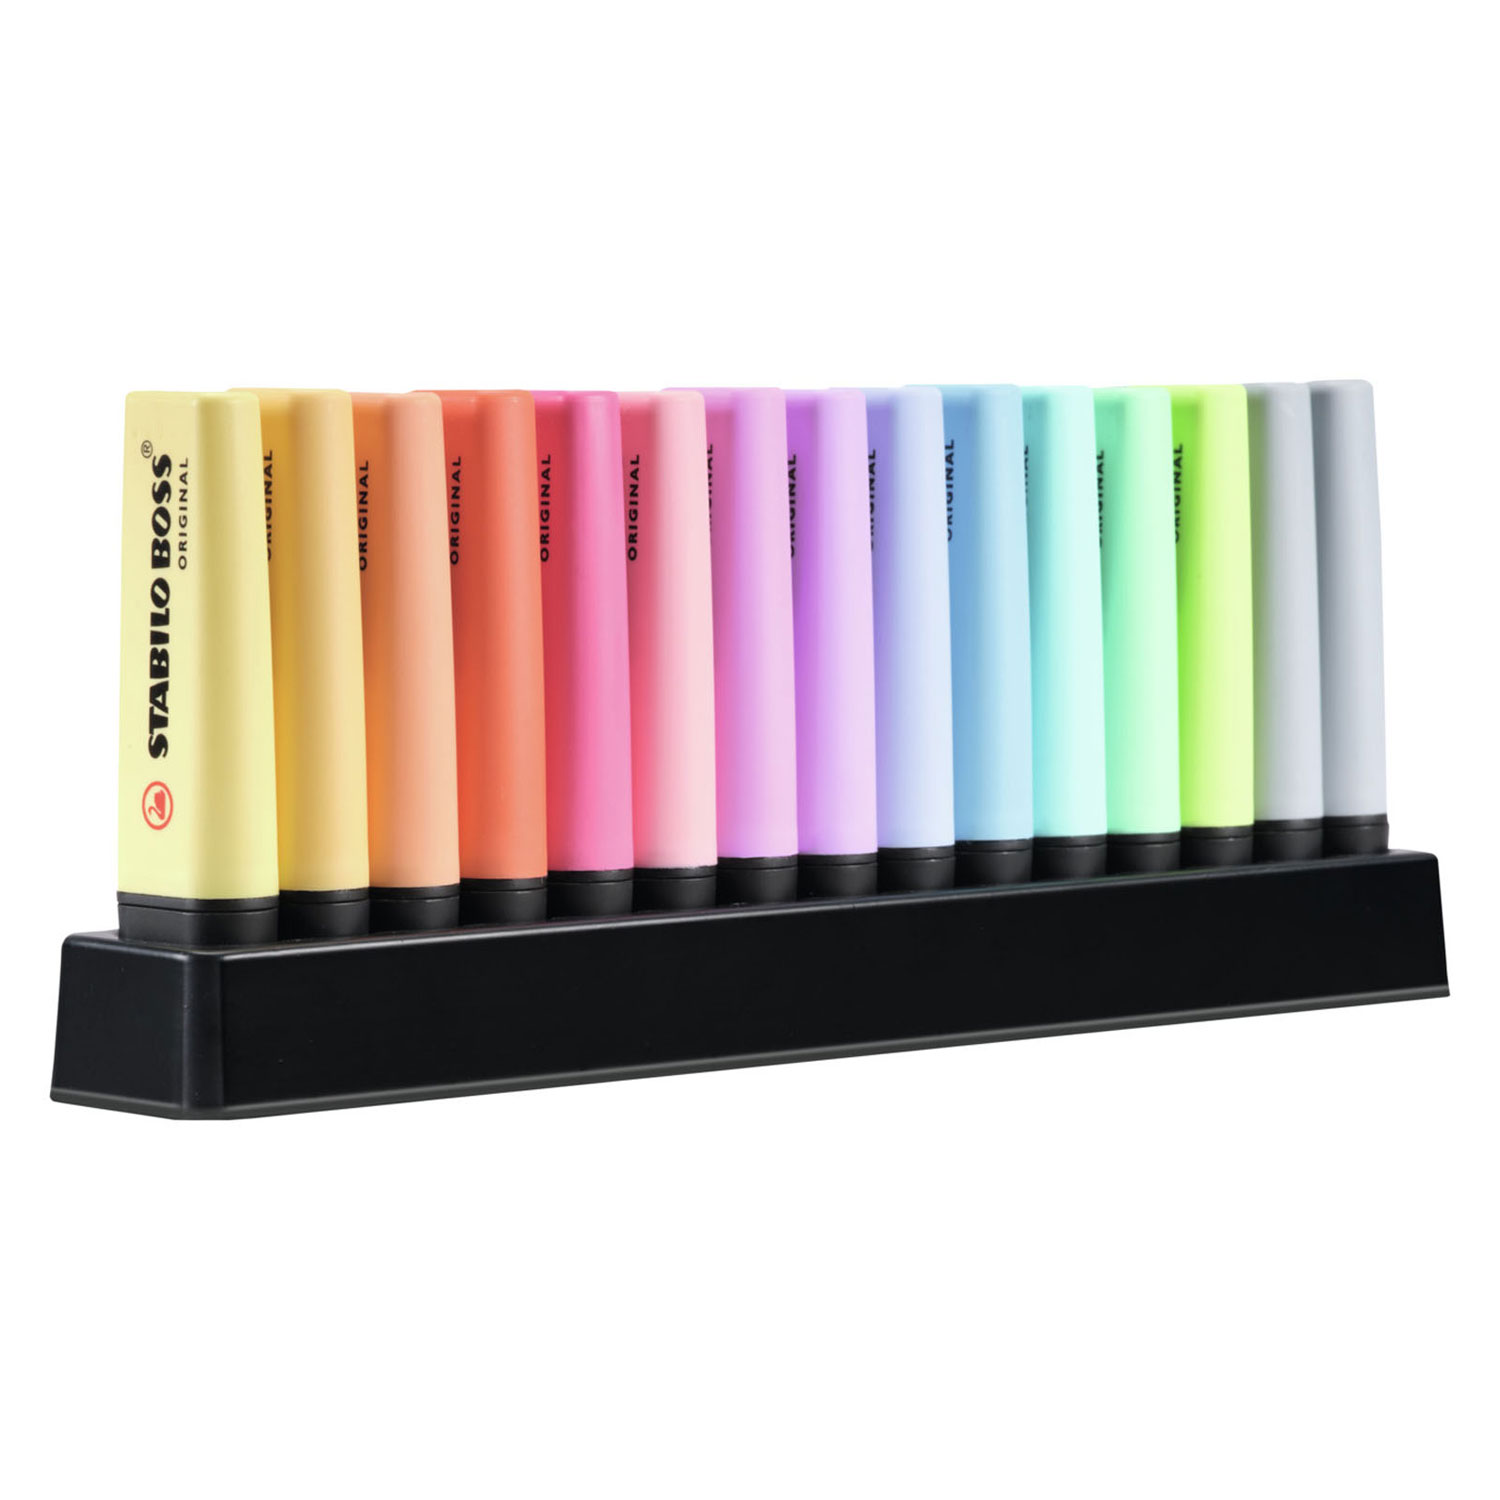 STABILO BOSS ORIGINAL Pastel Highlighter Set, 6-Color 